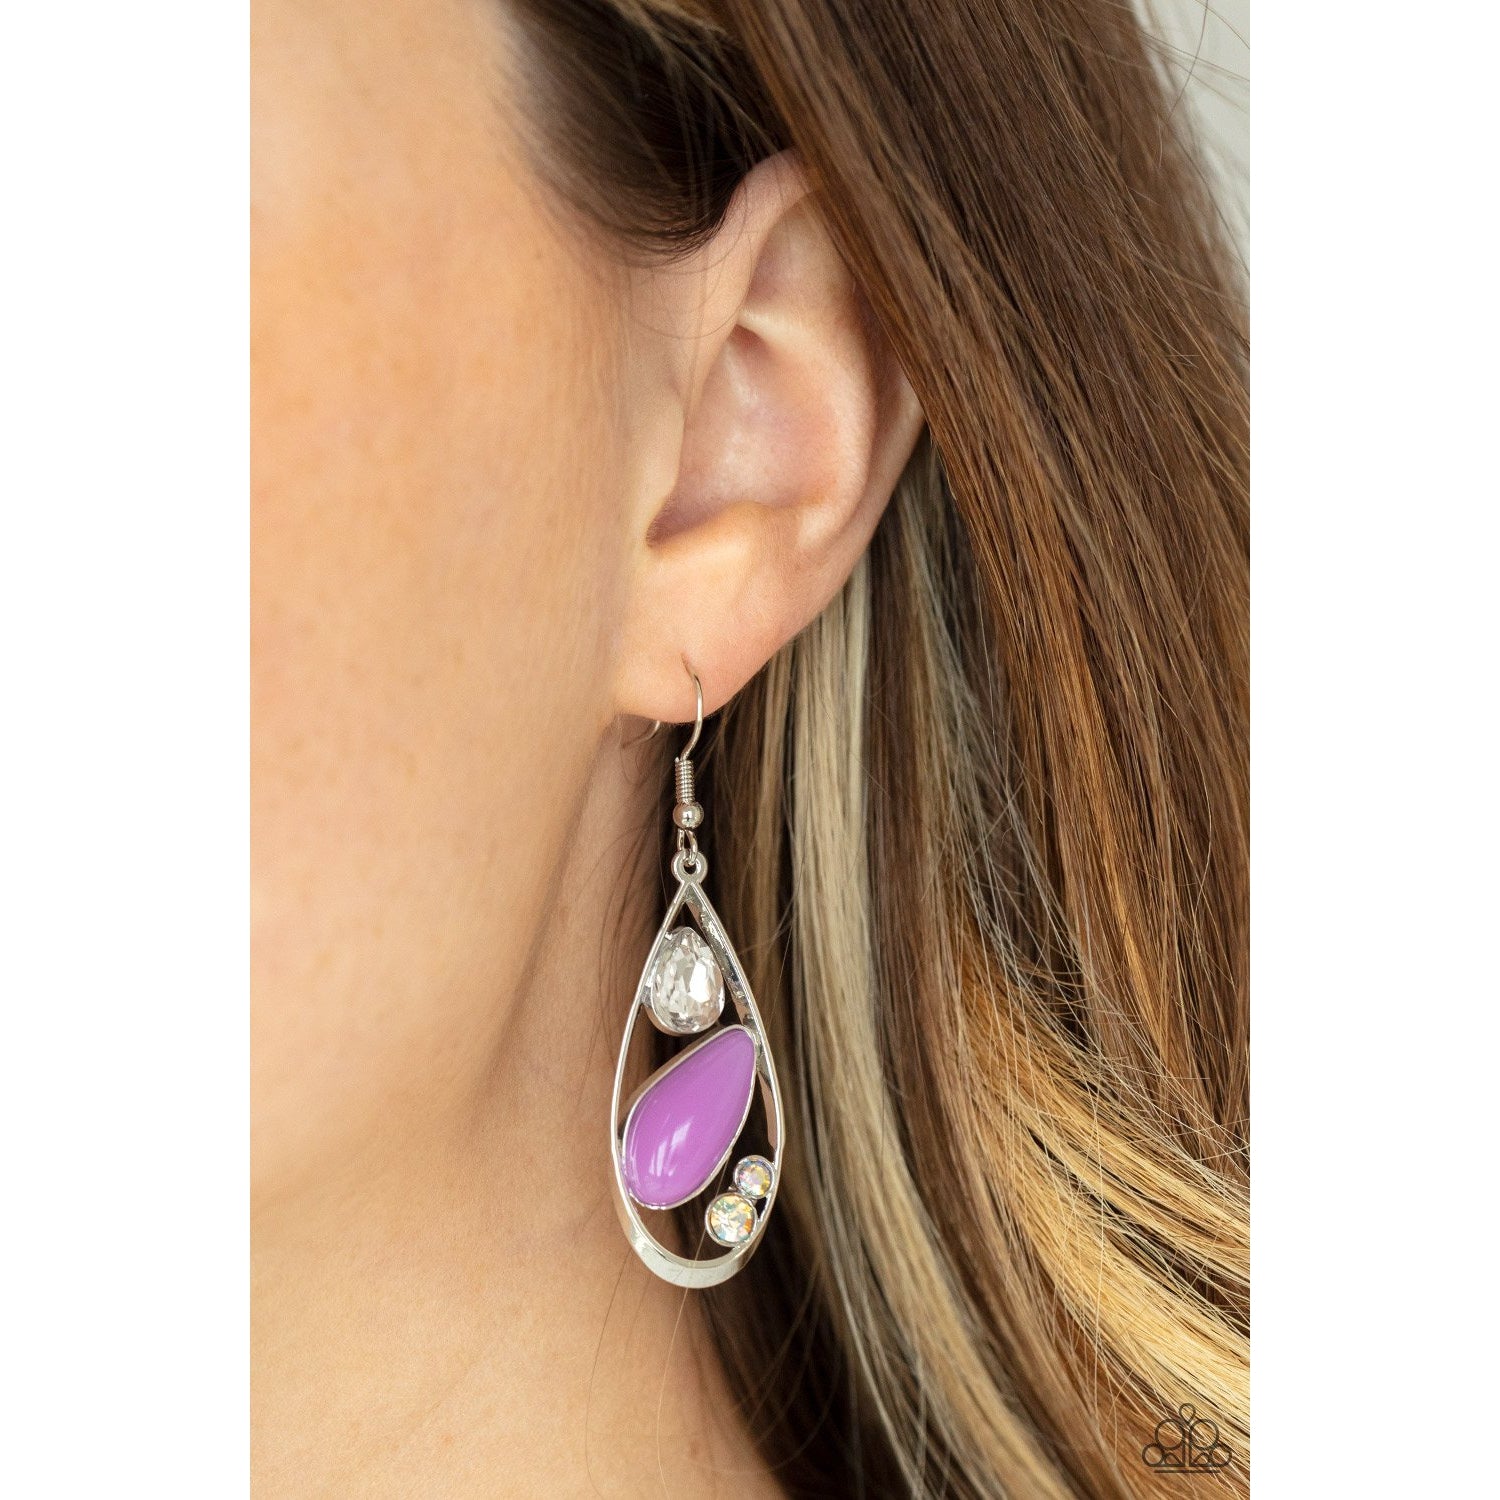 Harmonious Harbors - Purple Teardrop Earrings - Paparazzi Accessories - GlaMarous Titi Jewels